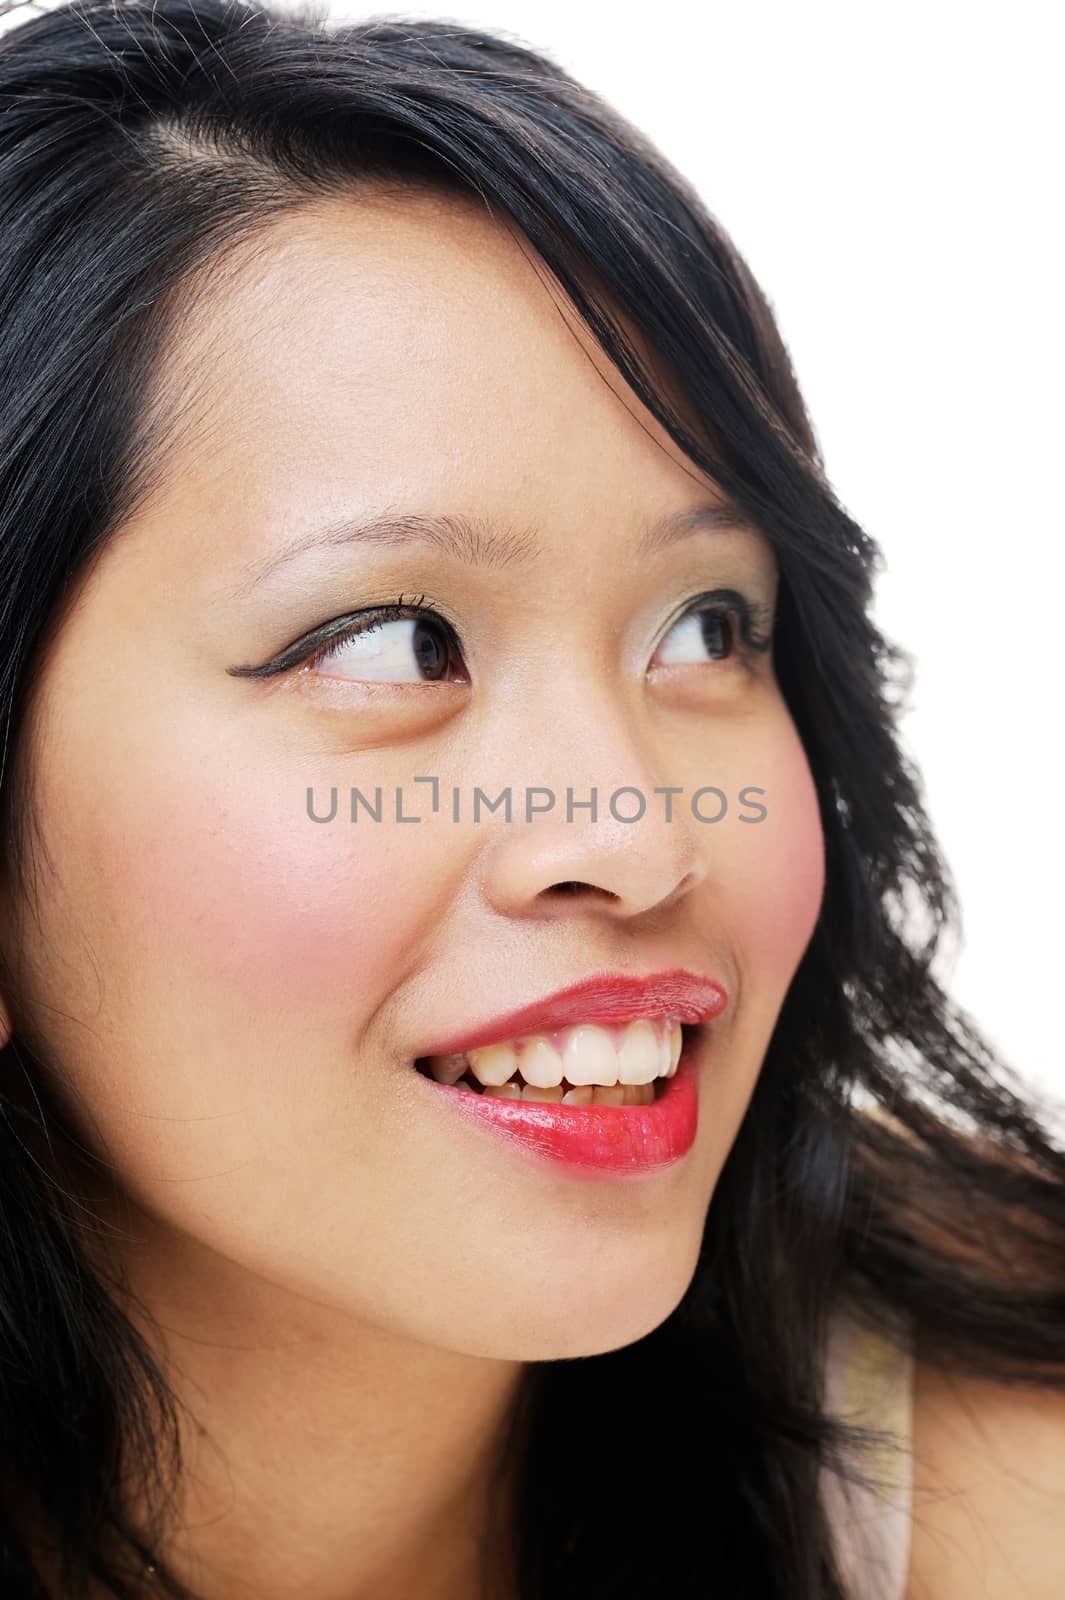 Asian girls face closeup looking happy wearing makeup